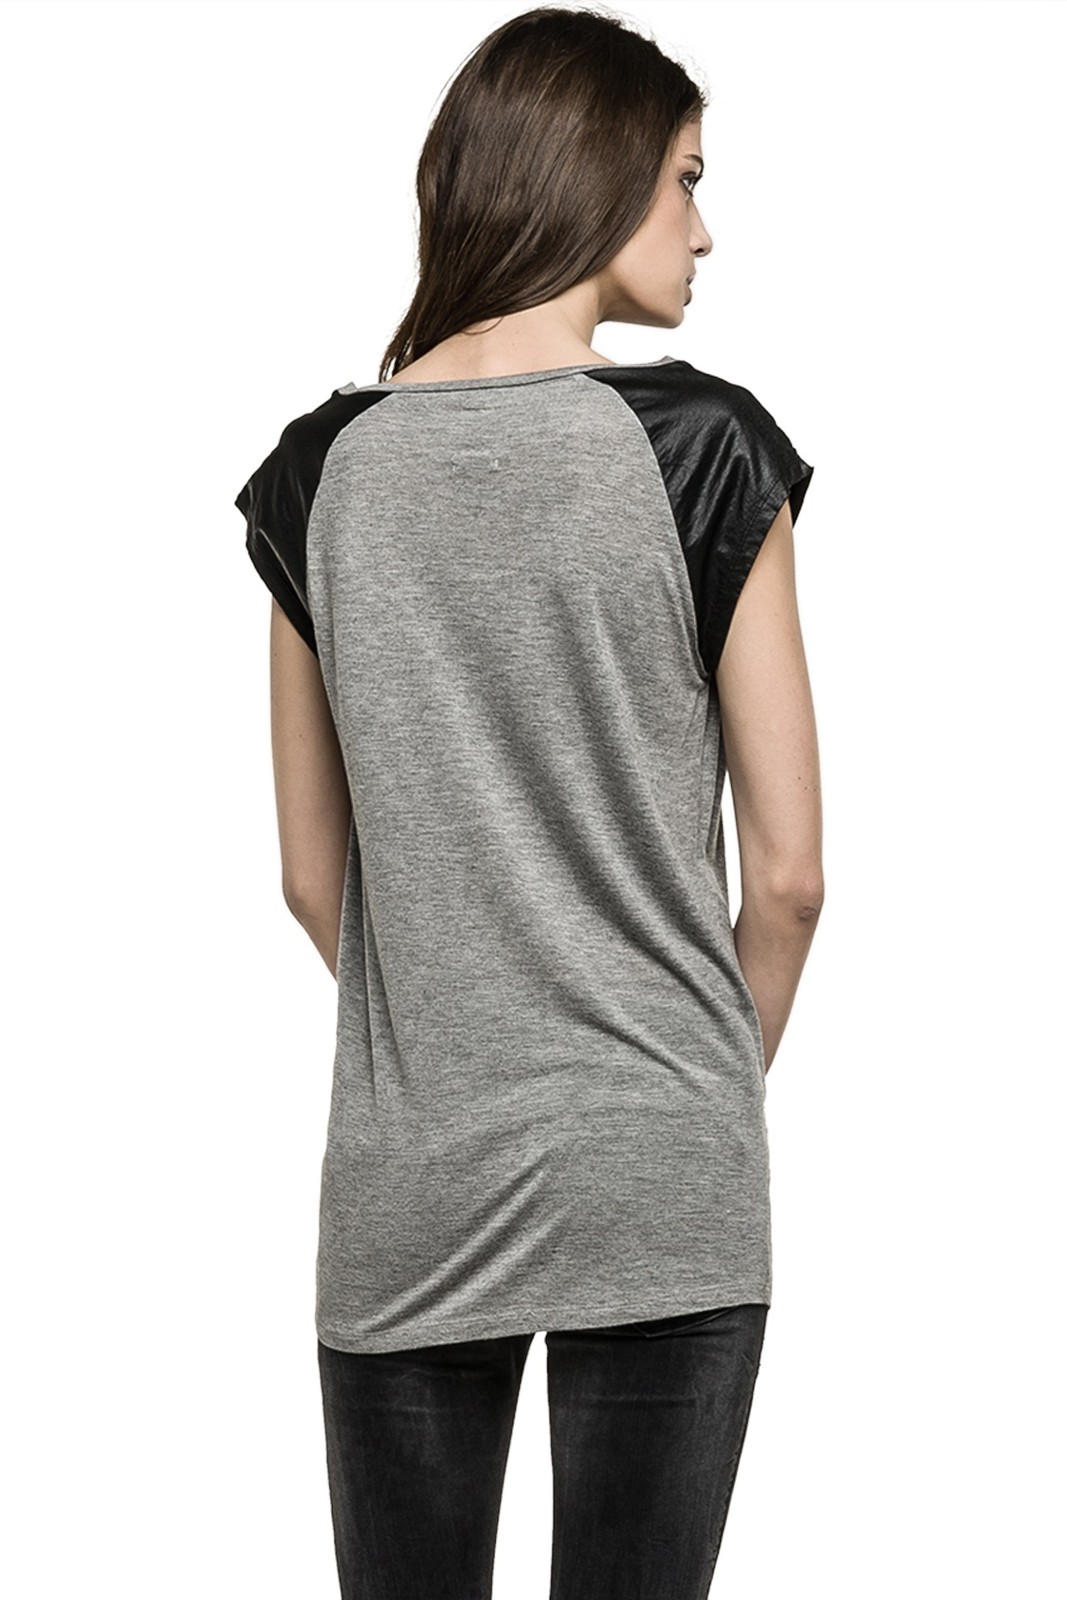 Replay női mikromodális T-shirt 2015.02.27 fotója